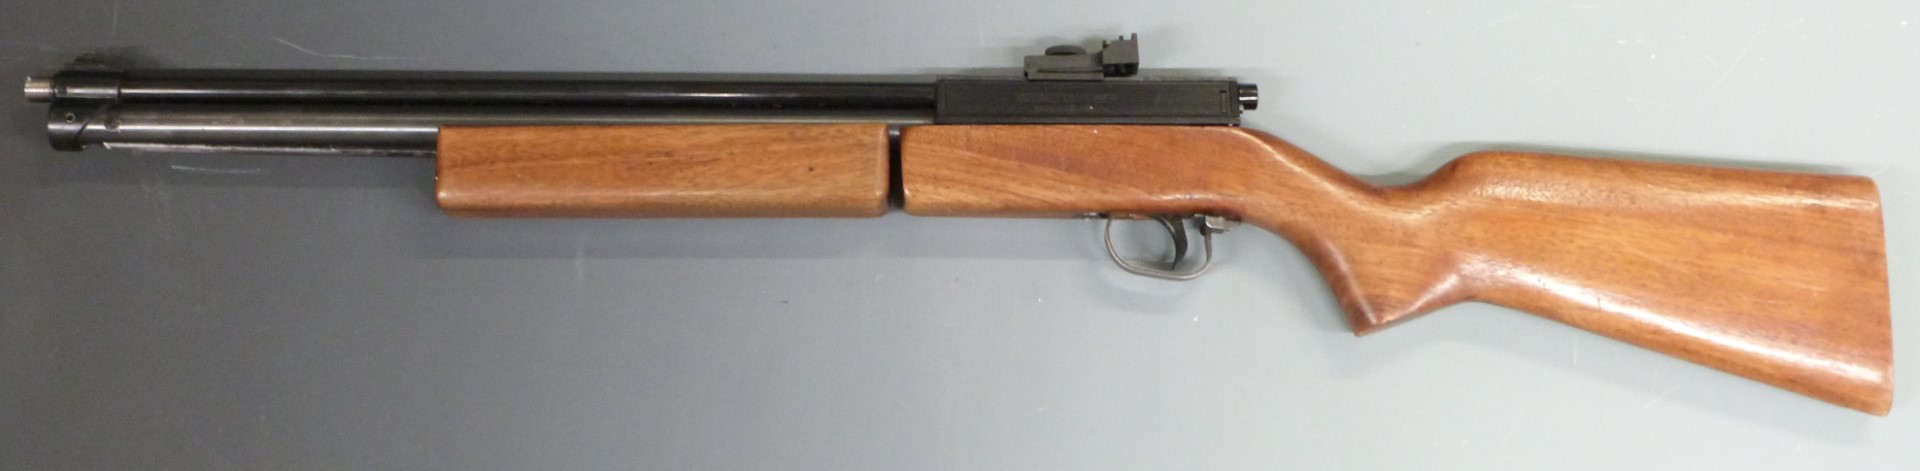 Sharp Innova II Japanese .22 air rifle with semi-pistol grip, adjustable trigger and adjustable - Image 2 of 3